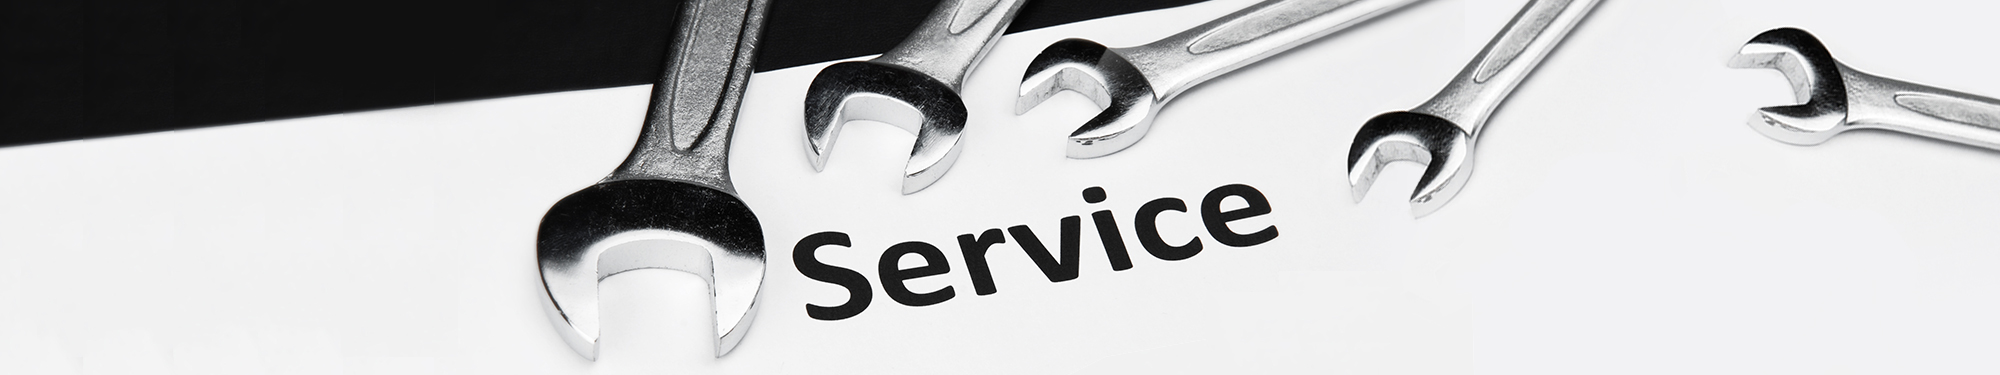 Service Centre - Service Contracts